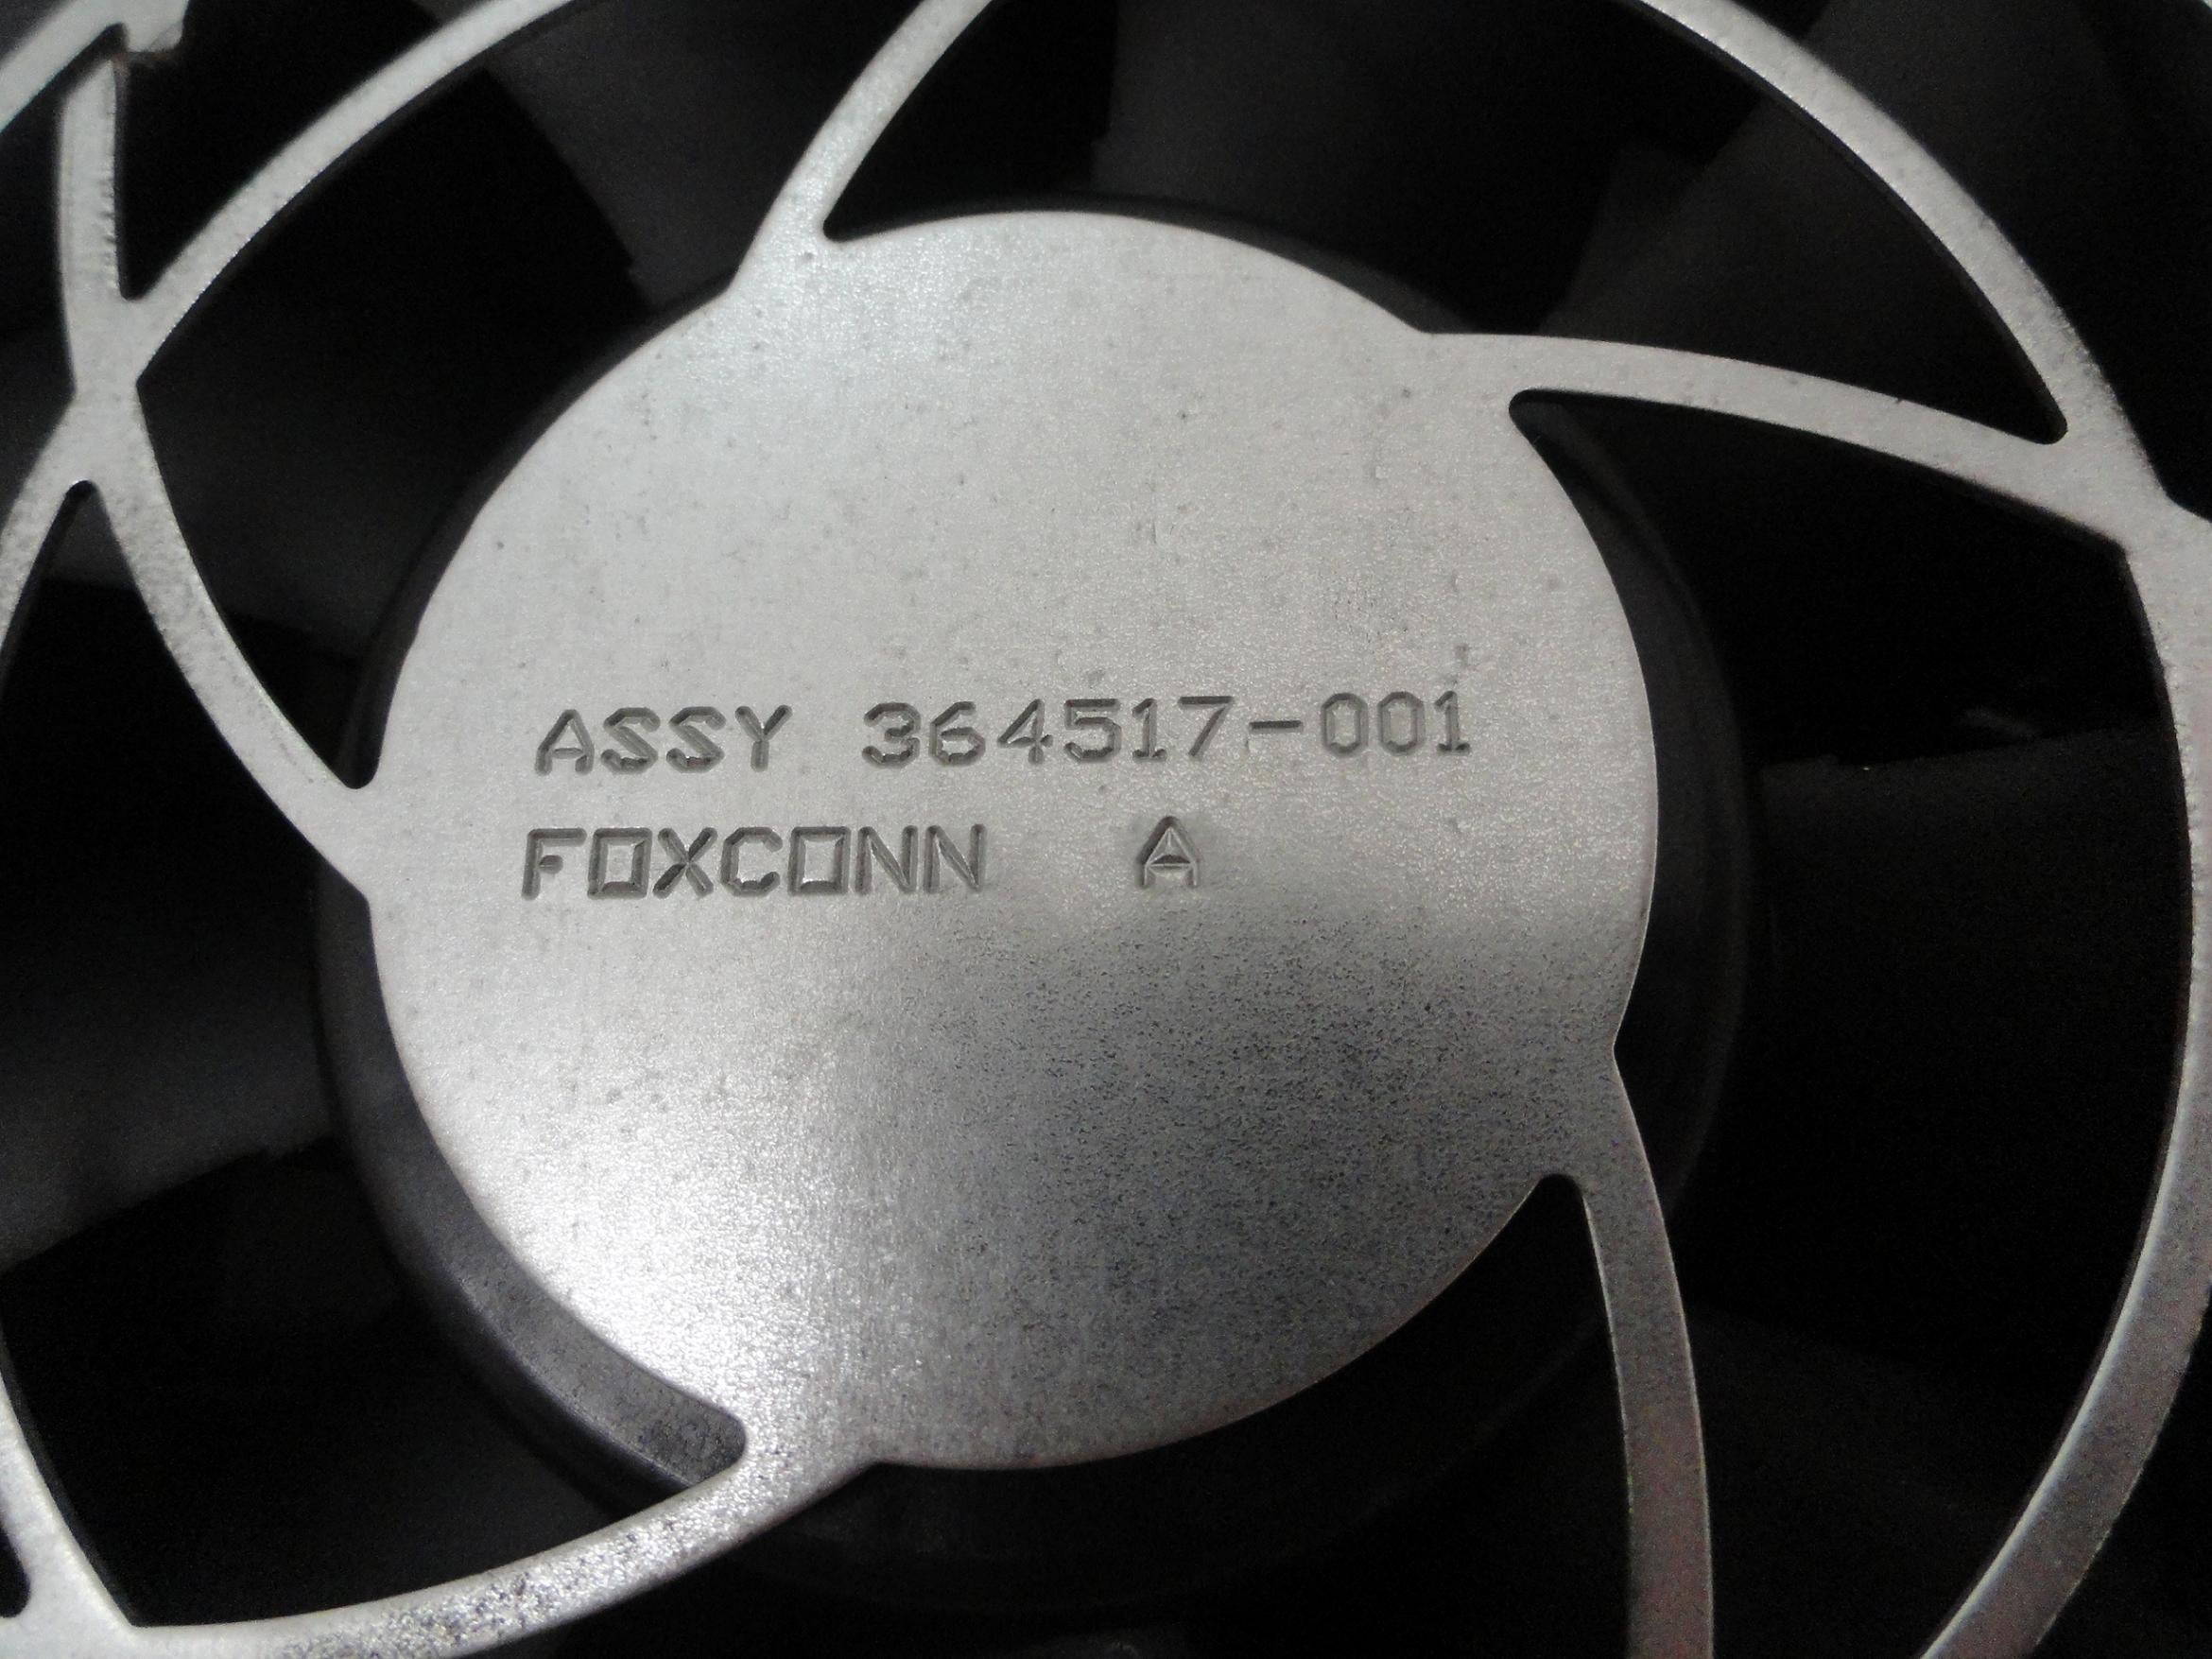 PR16568_VA450DC_Nidec 120mm Fan Assembly from HP Proliant DL580 G4 - Image2